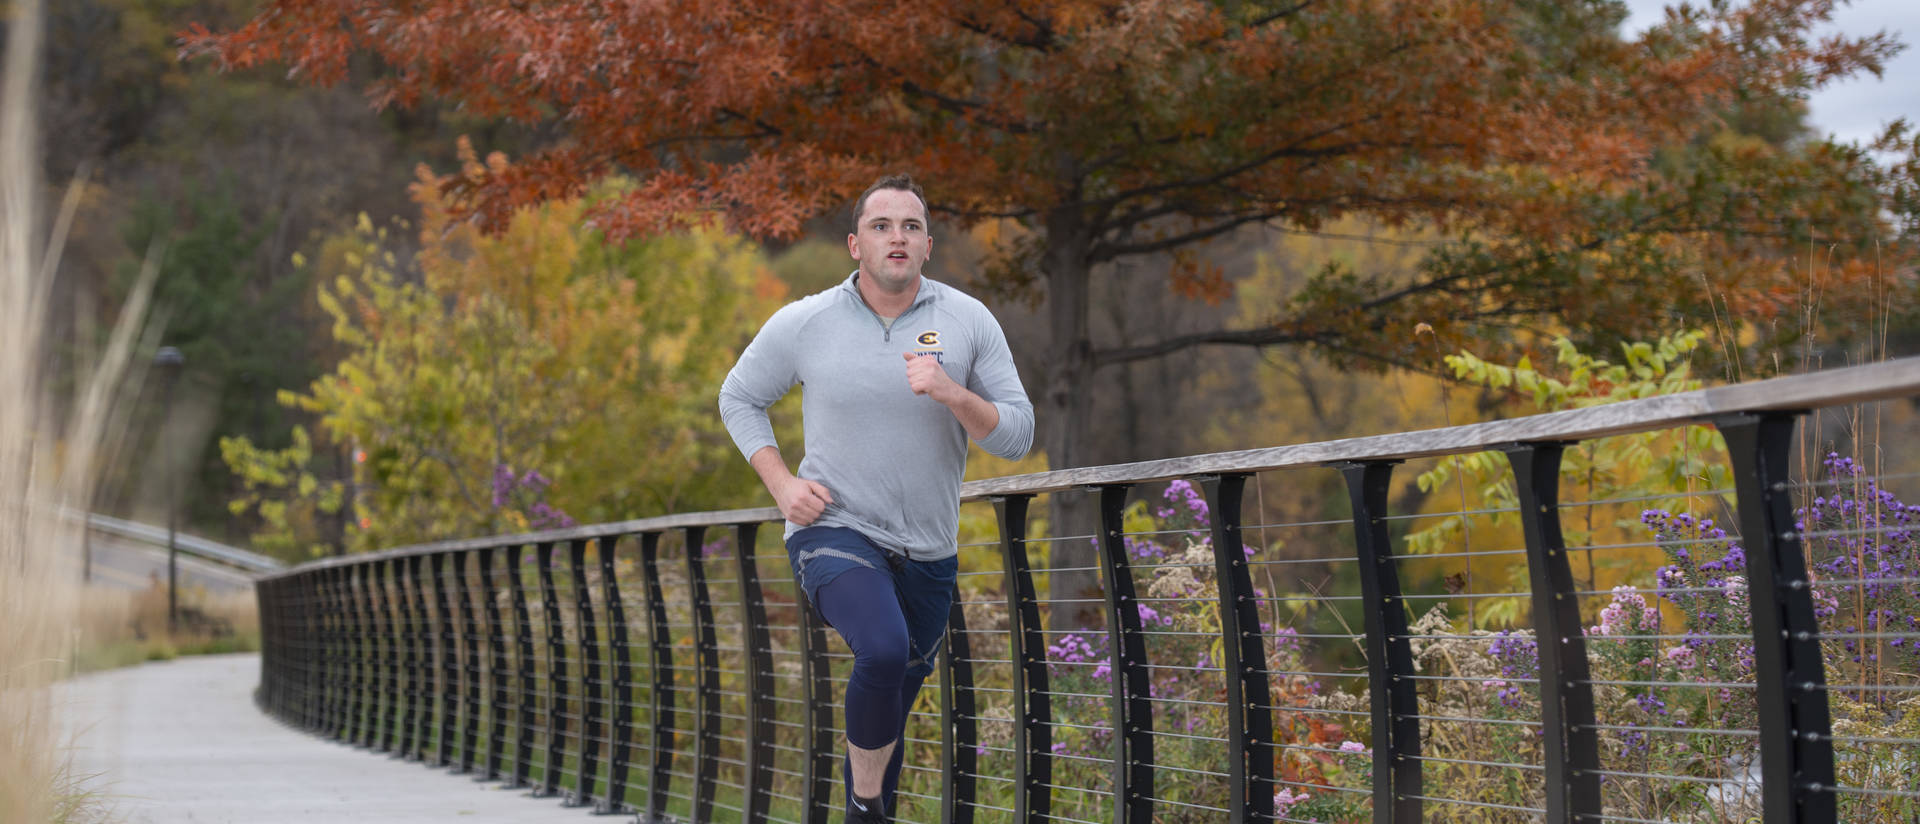 Ricky Schiff training for half marathon